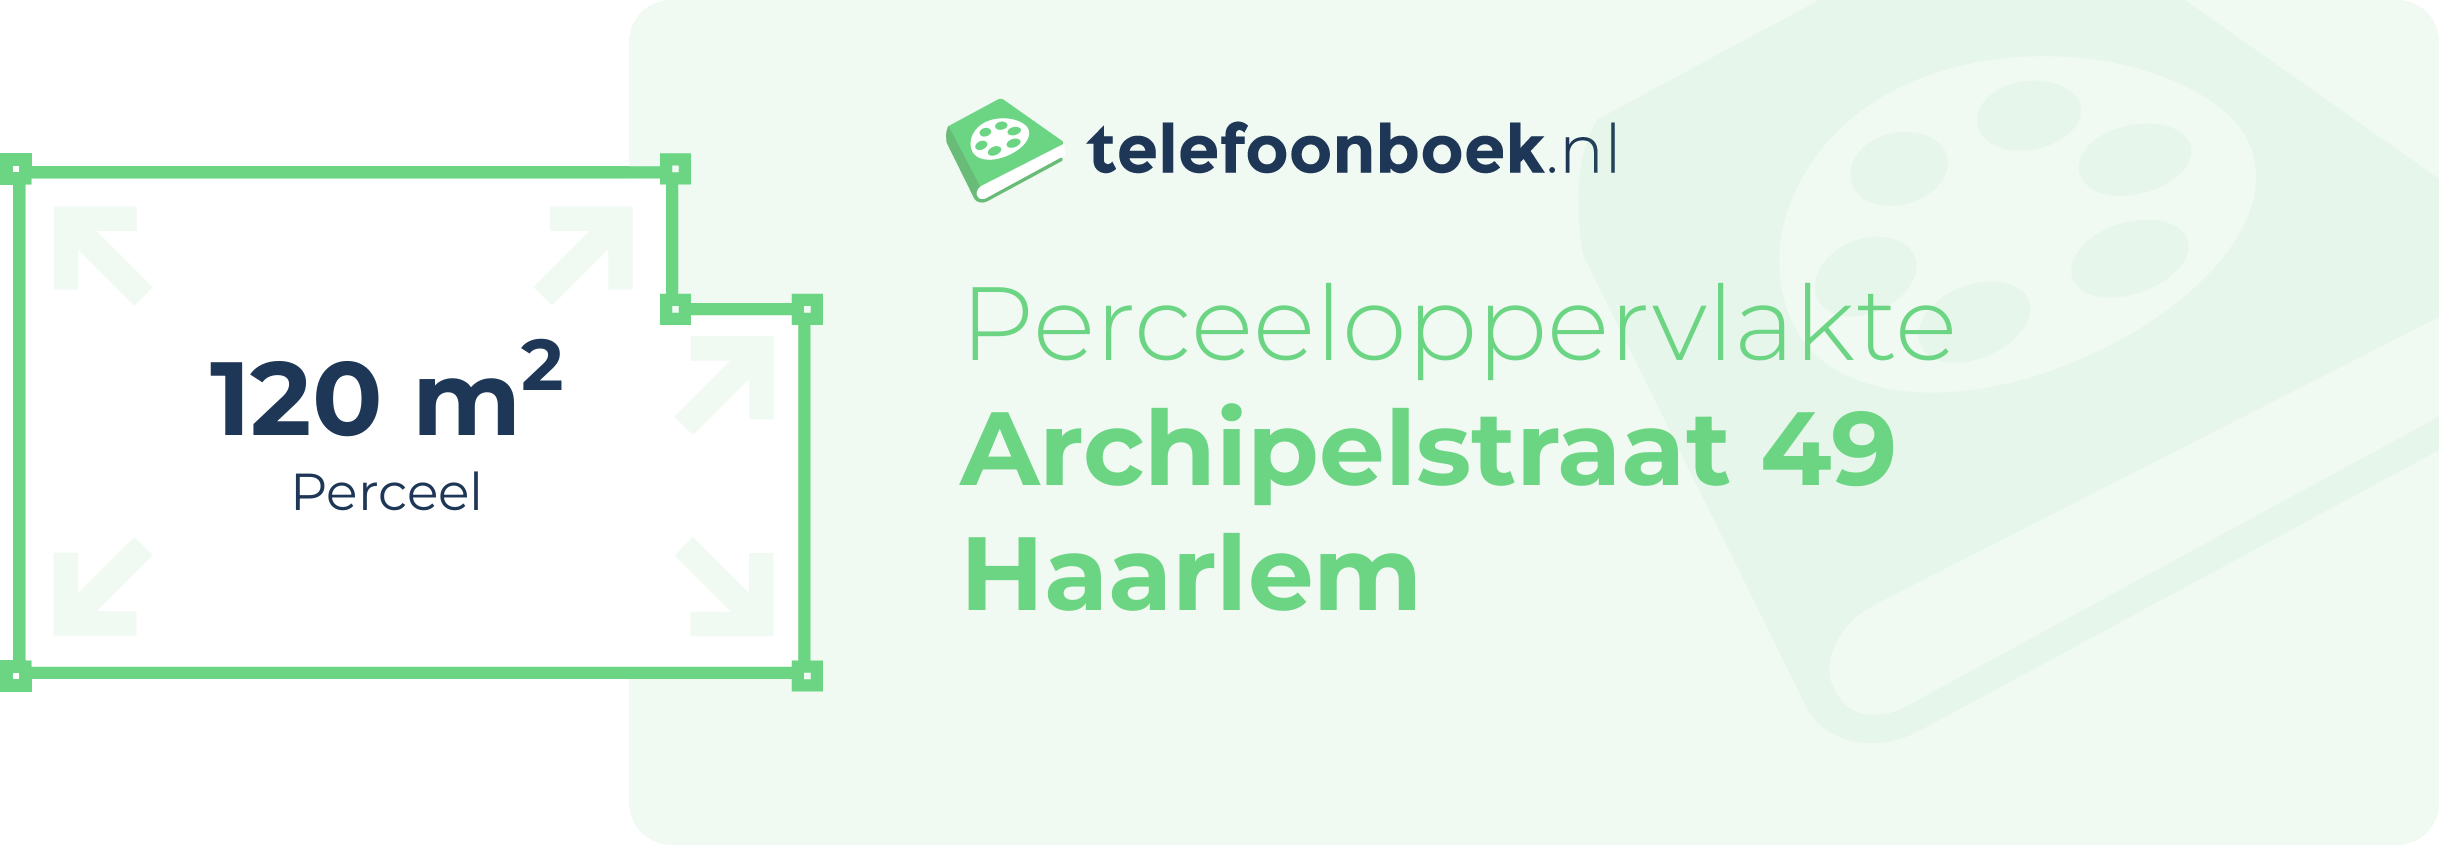 Perceeloppervlakte Archipelstraat 49 Haarlem